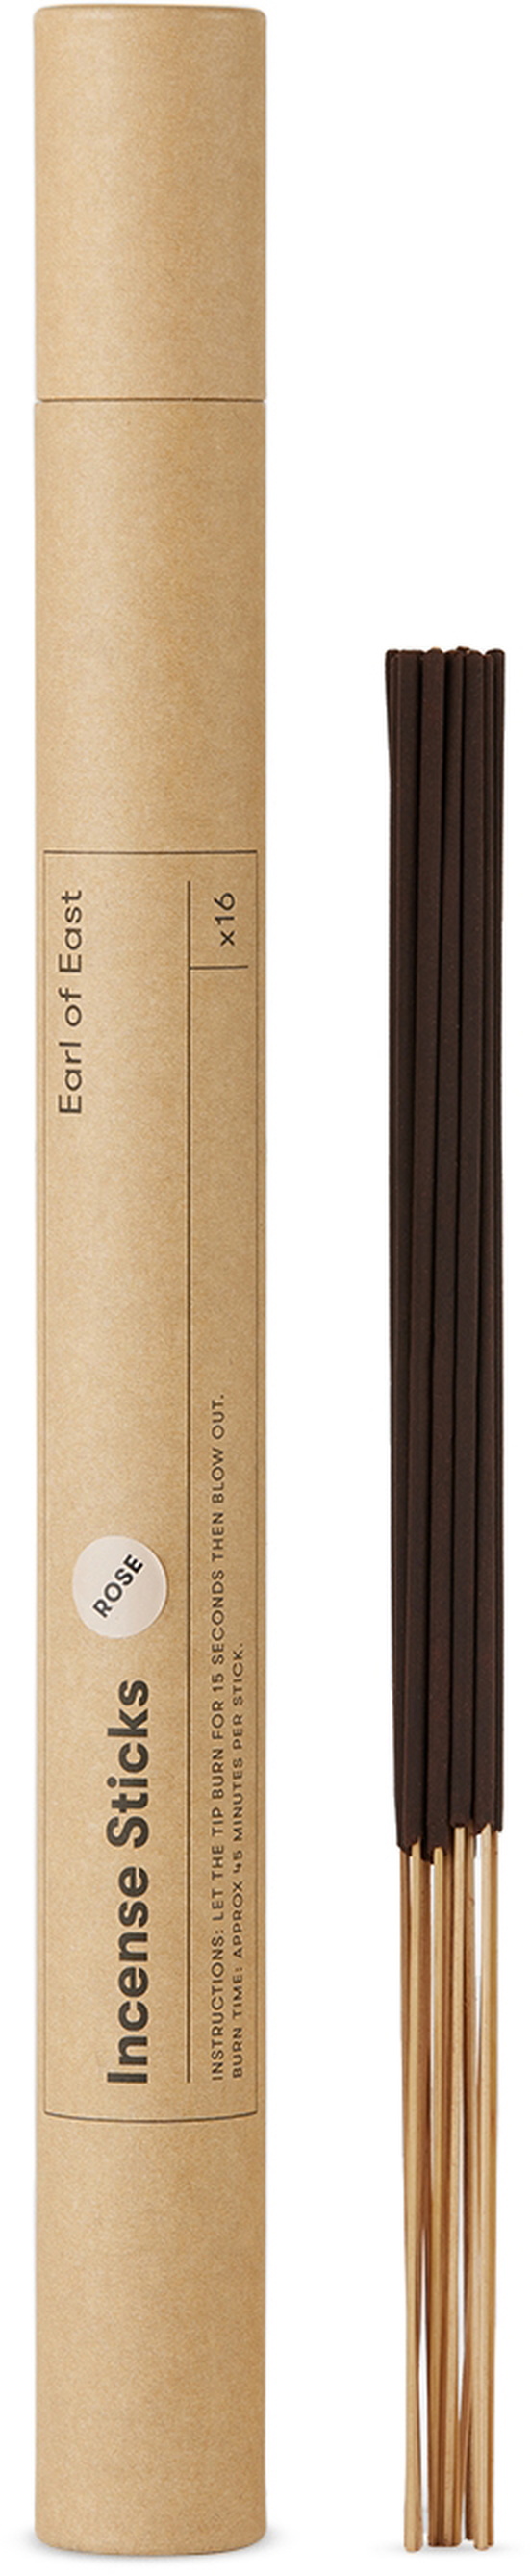 Earl of East 16-Pack Rose Incense Sticks